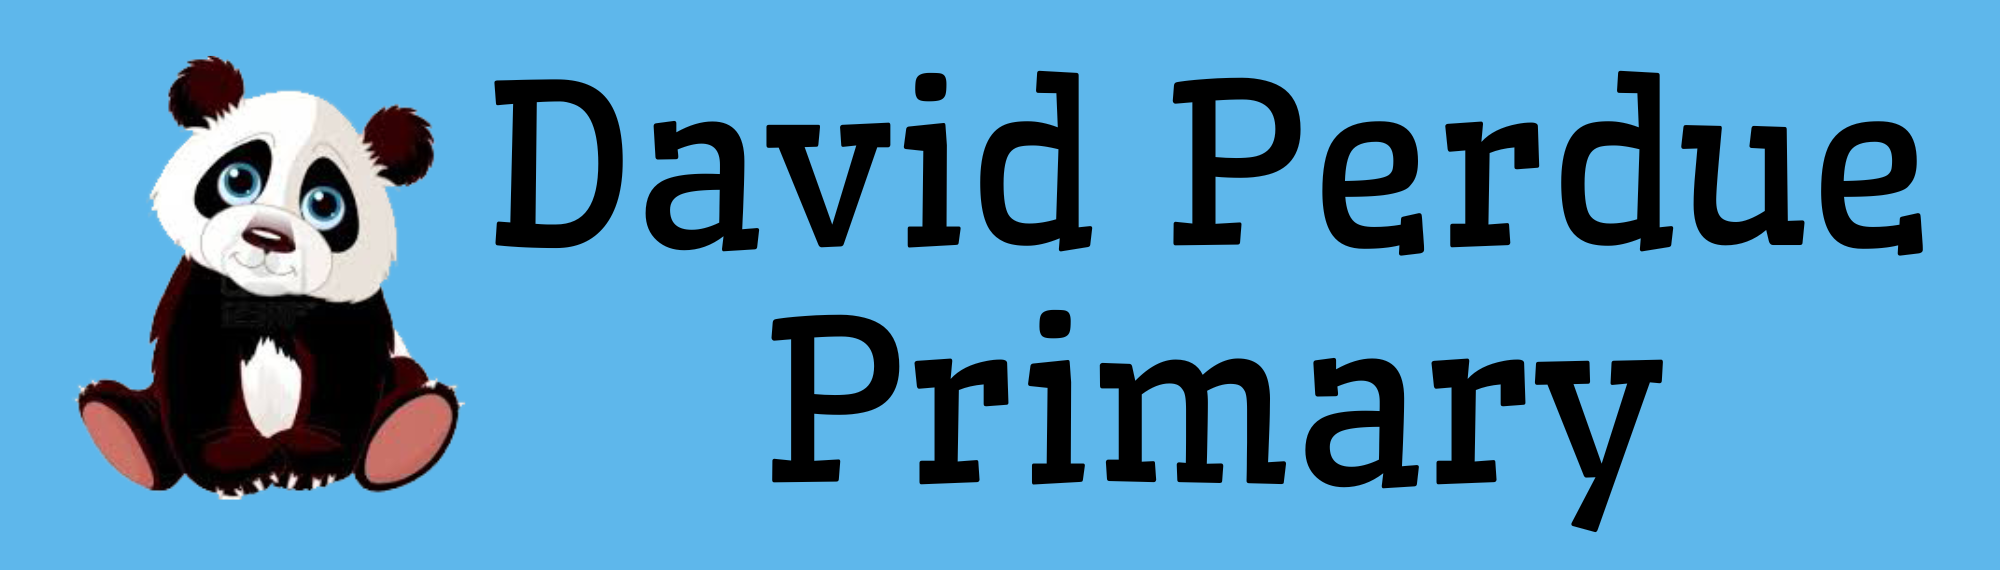 David Perdue Primary